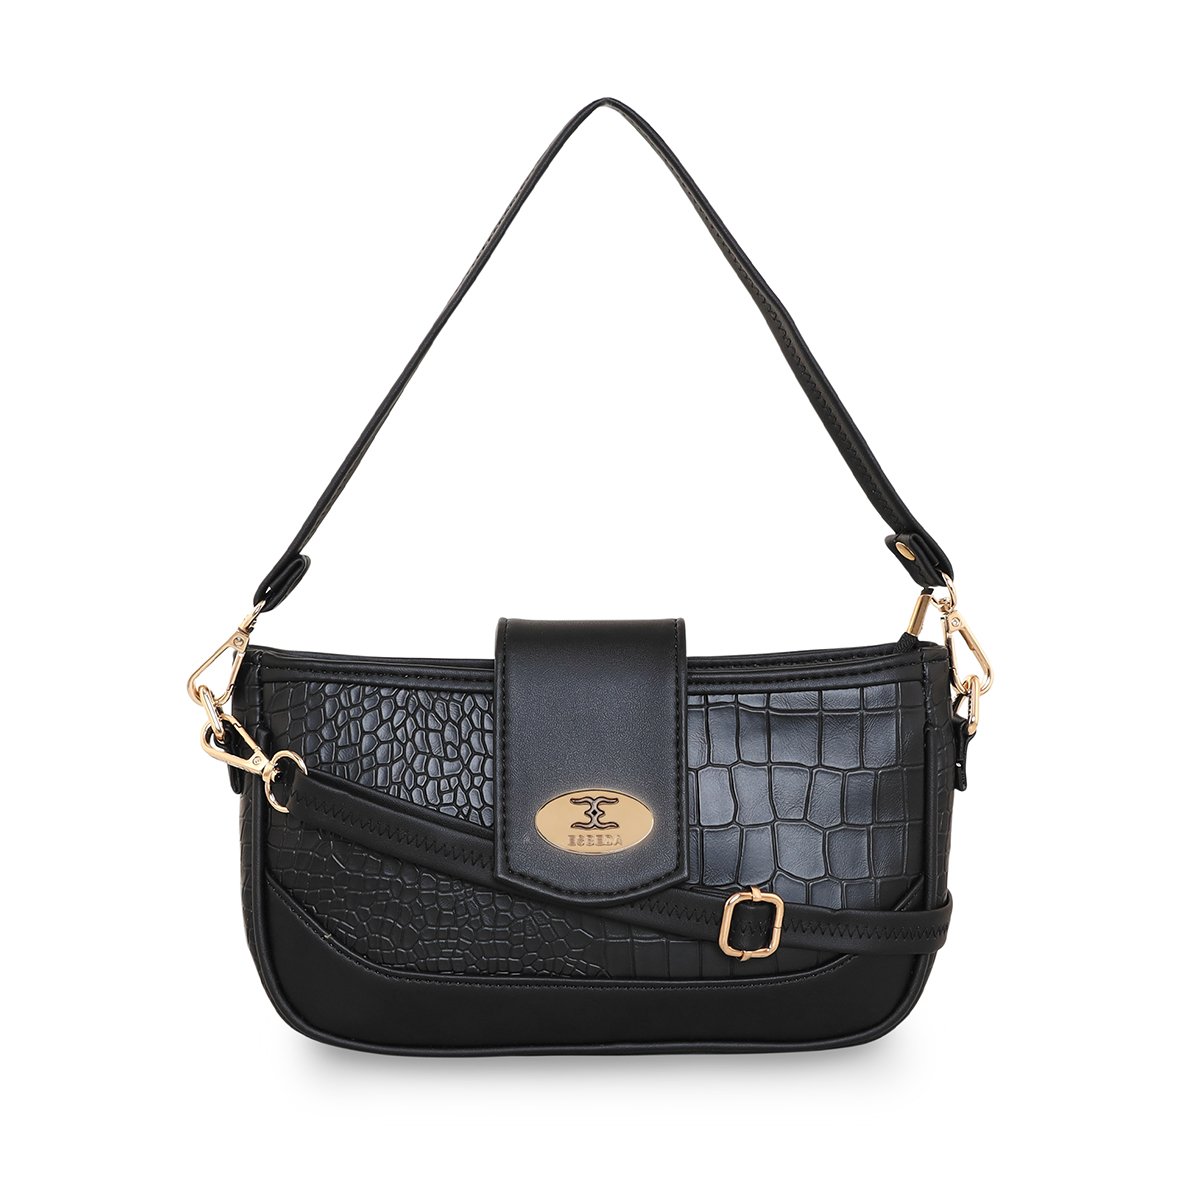 ESBEDA Ladies Sling Bag Black Colour (MSA01_1367) : Amazon.in: Fashion